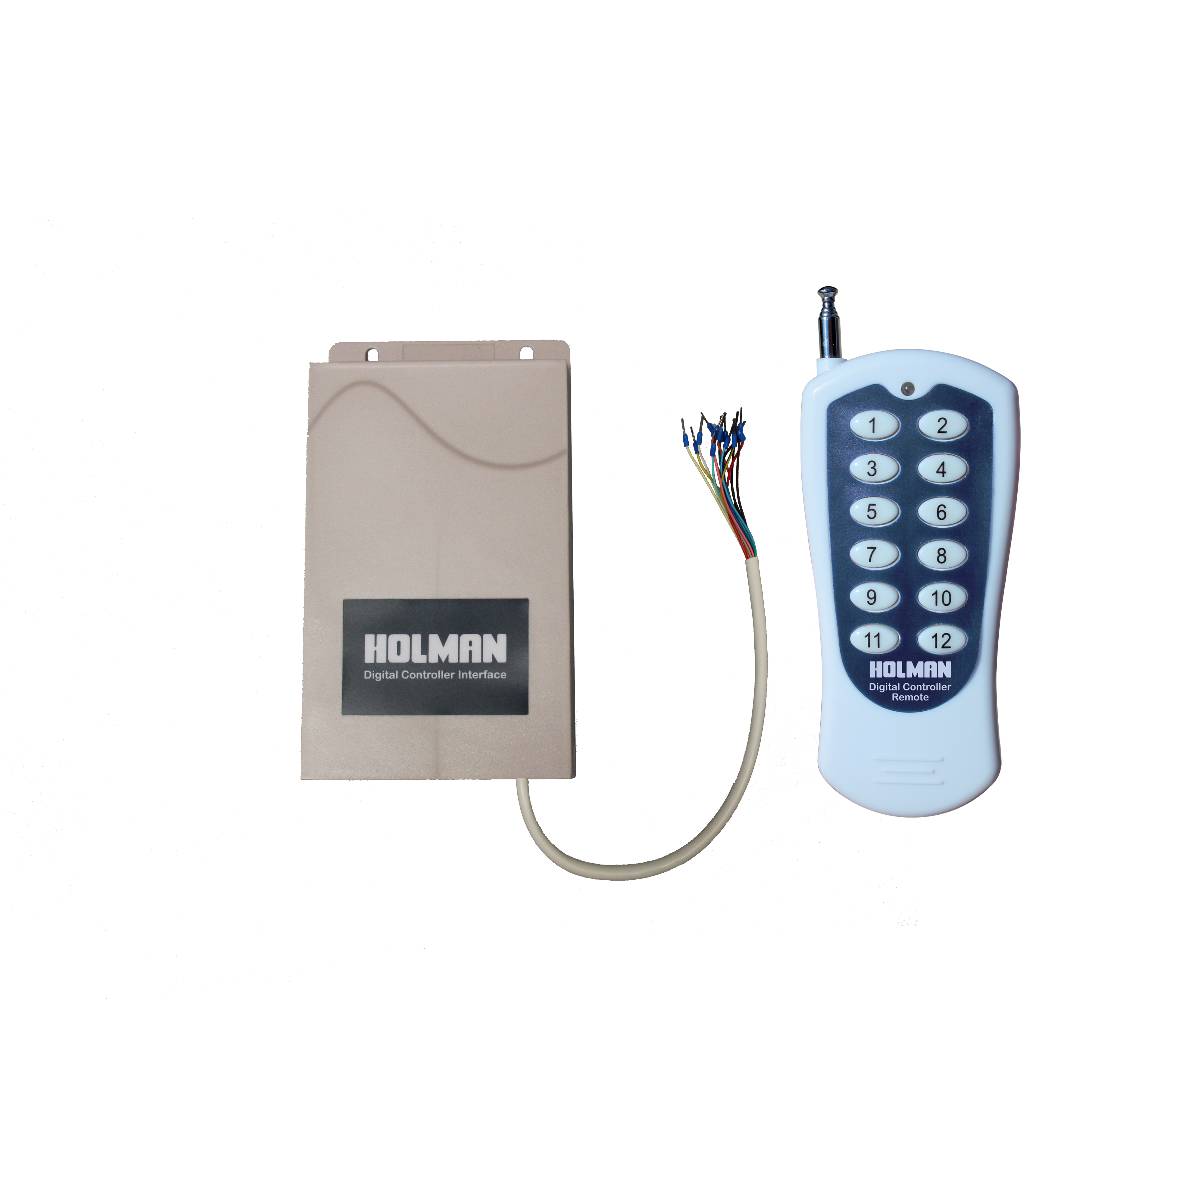 Holman Digital Remote Control